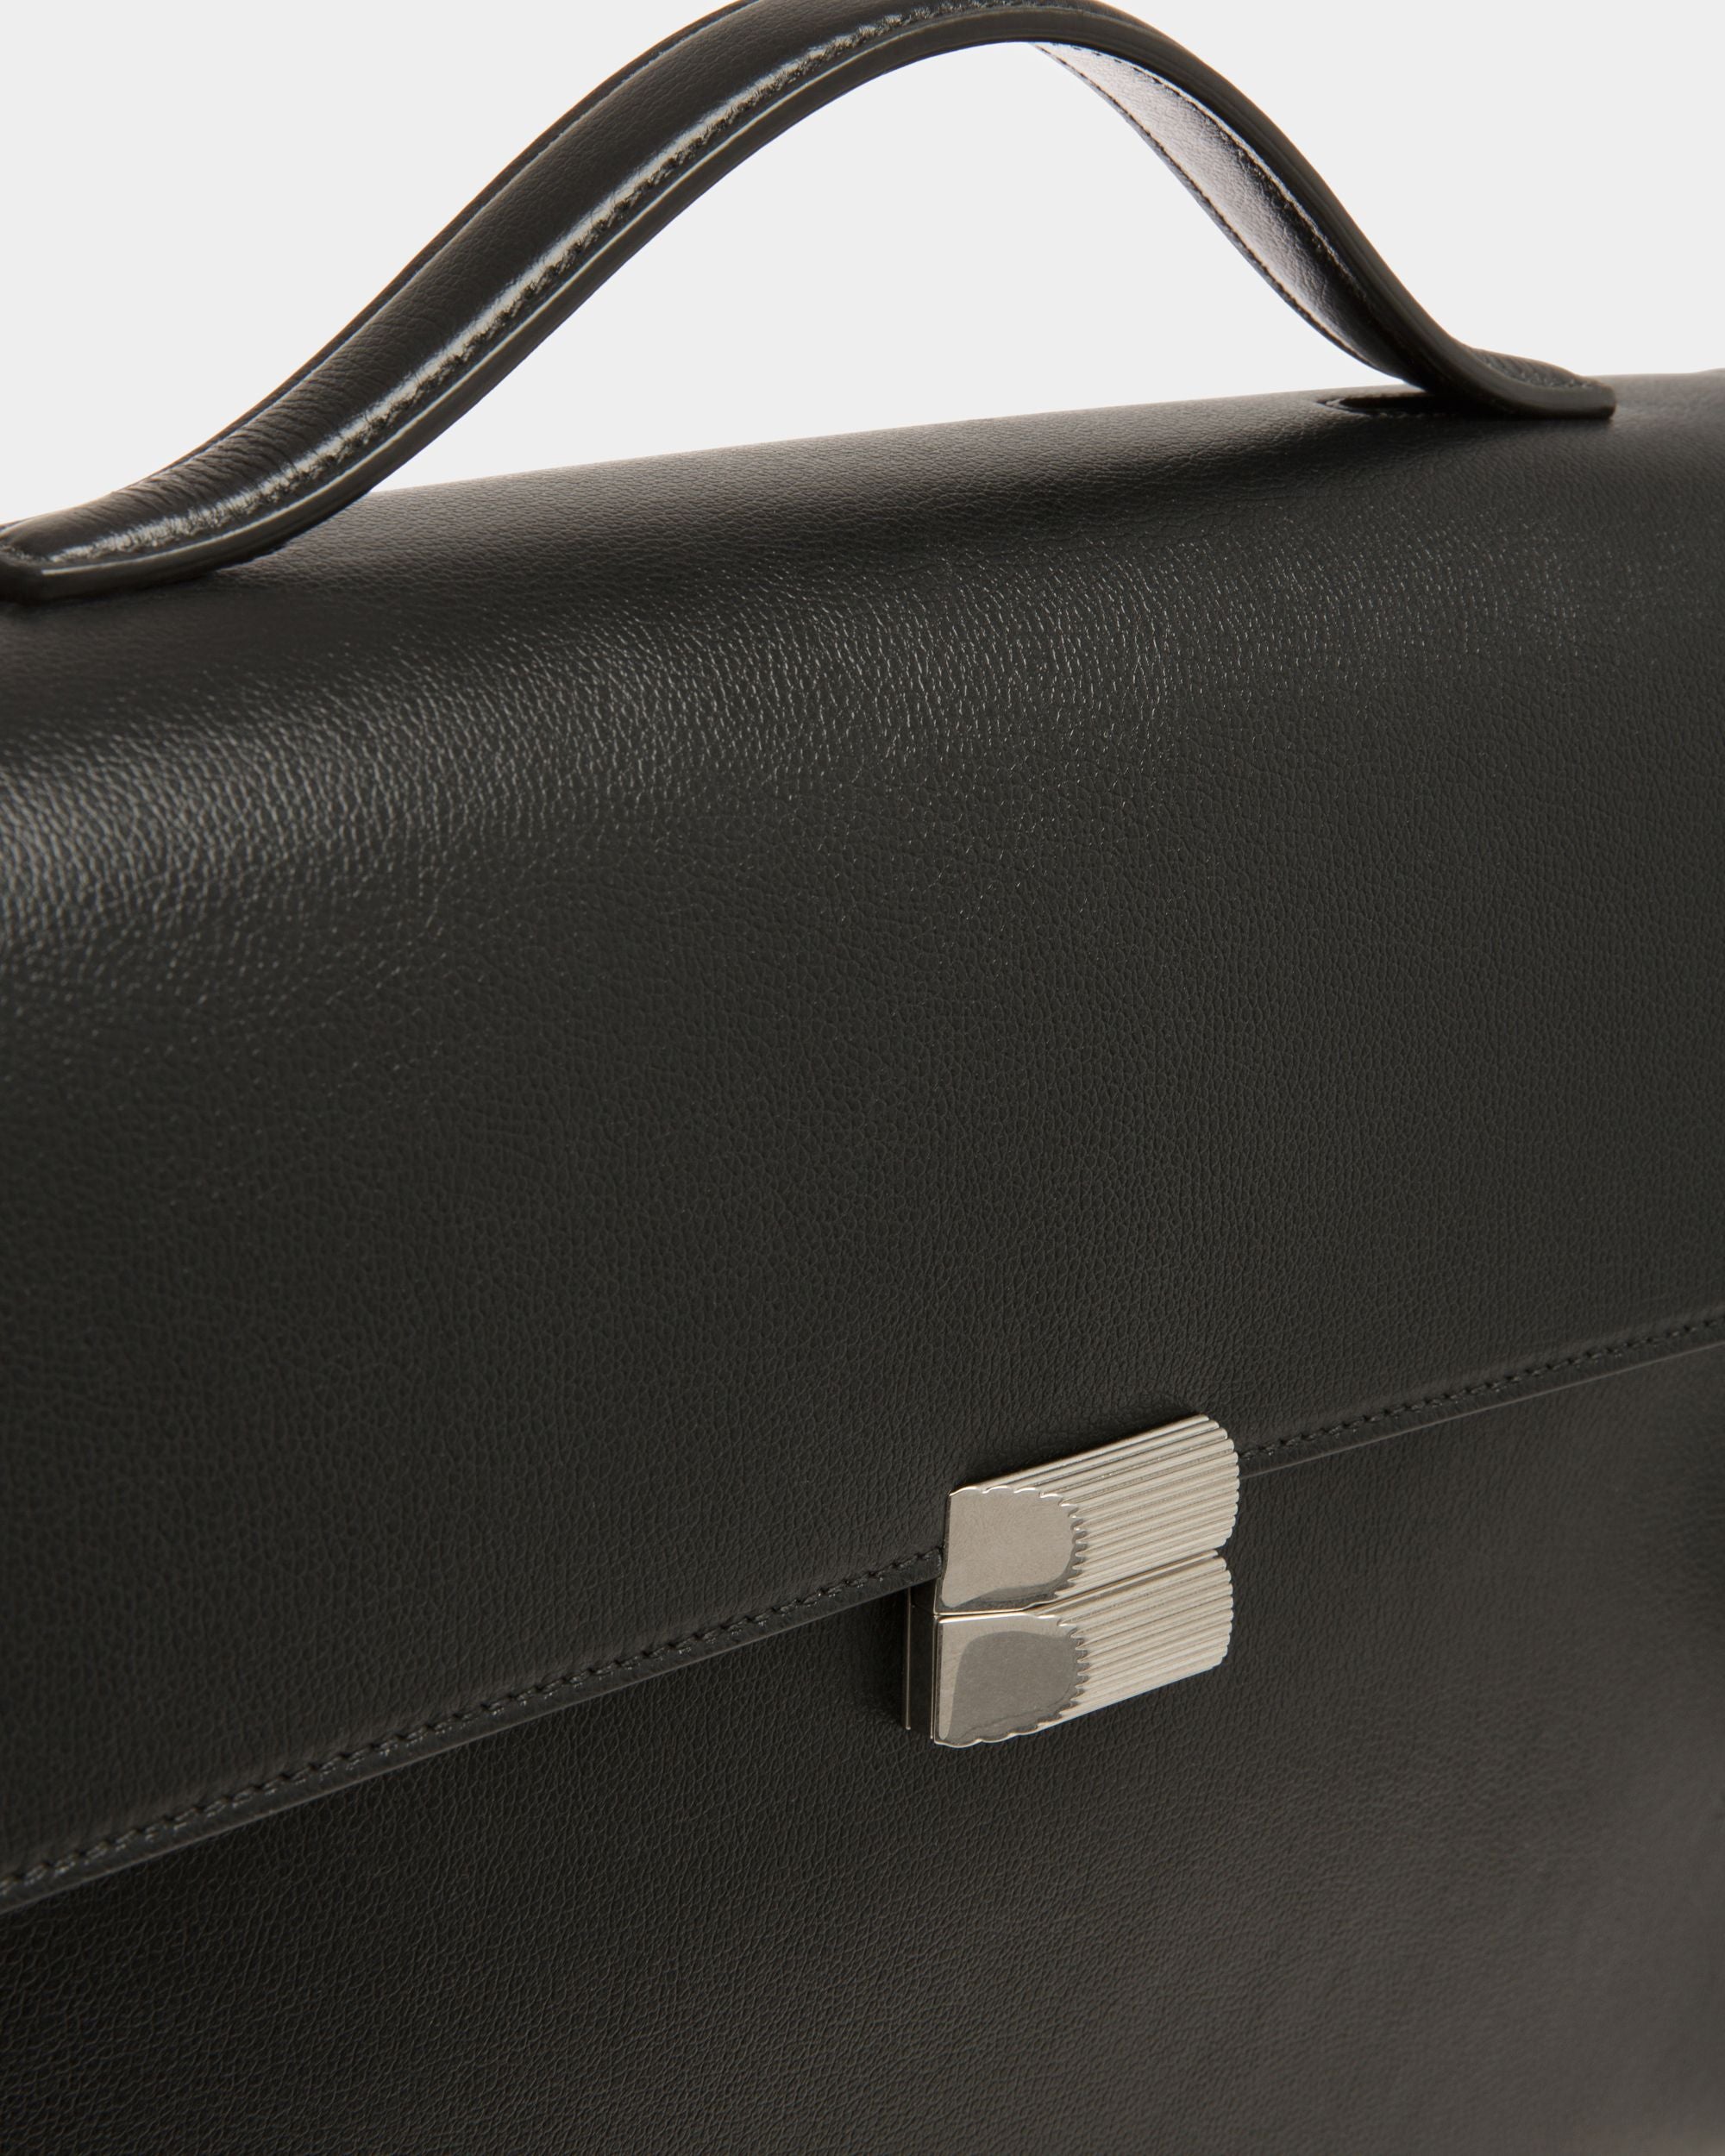 Packed | Men's Business Bag | Black Leather | Bally | Still Life Detail